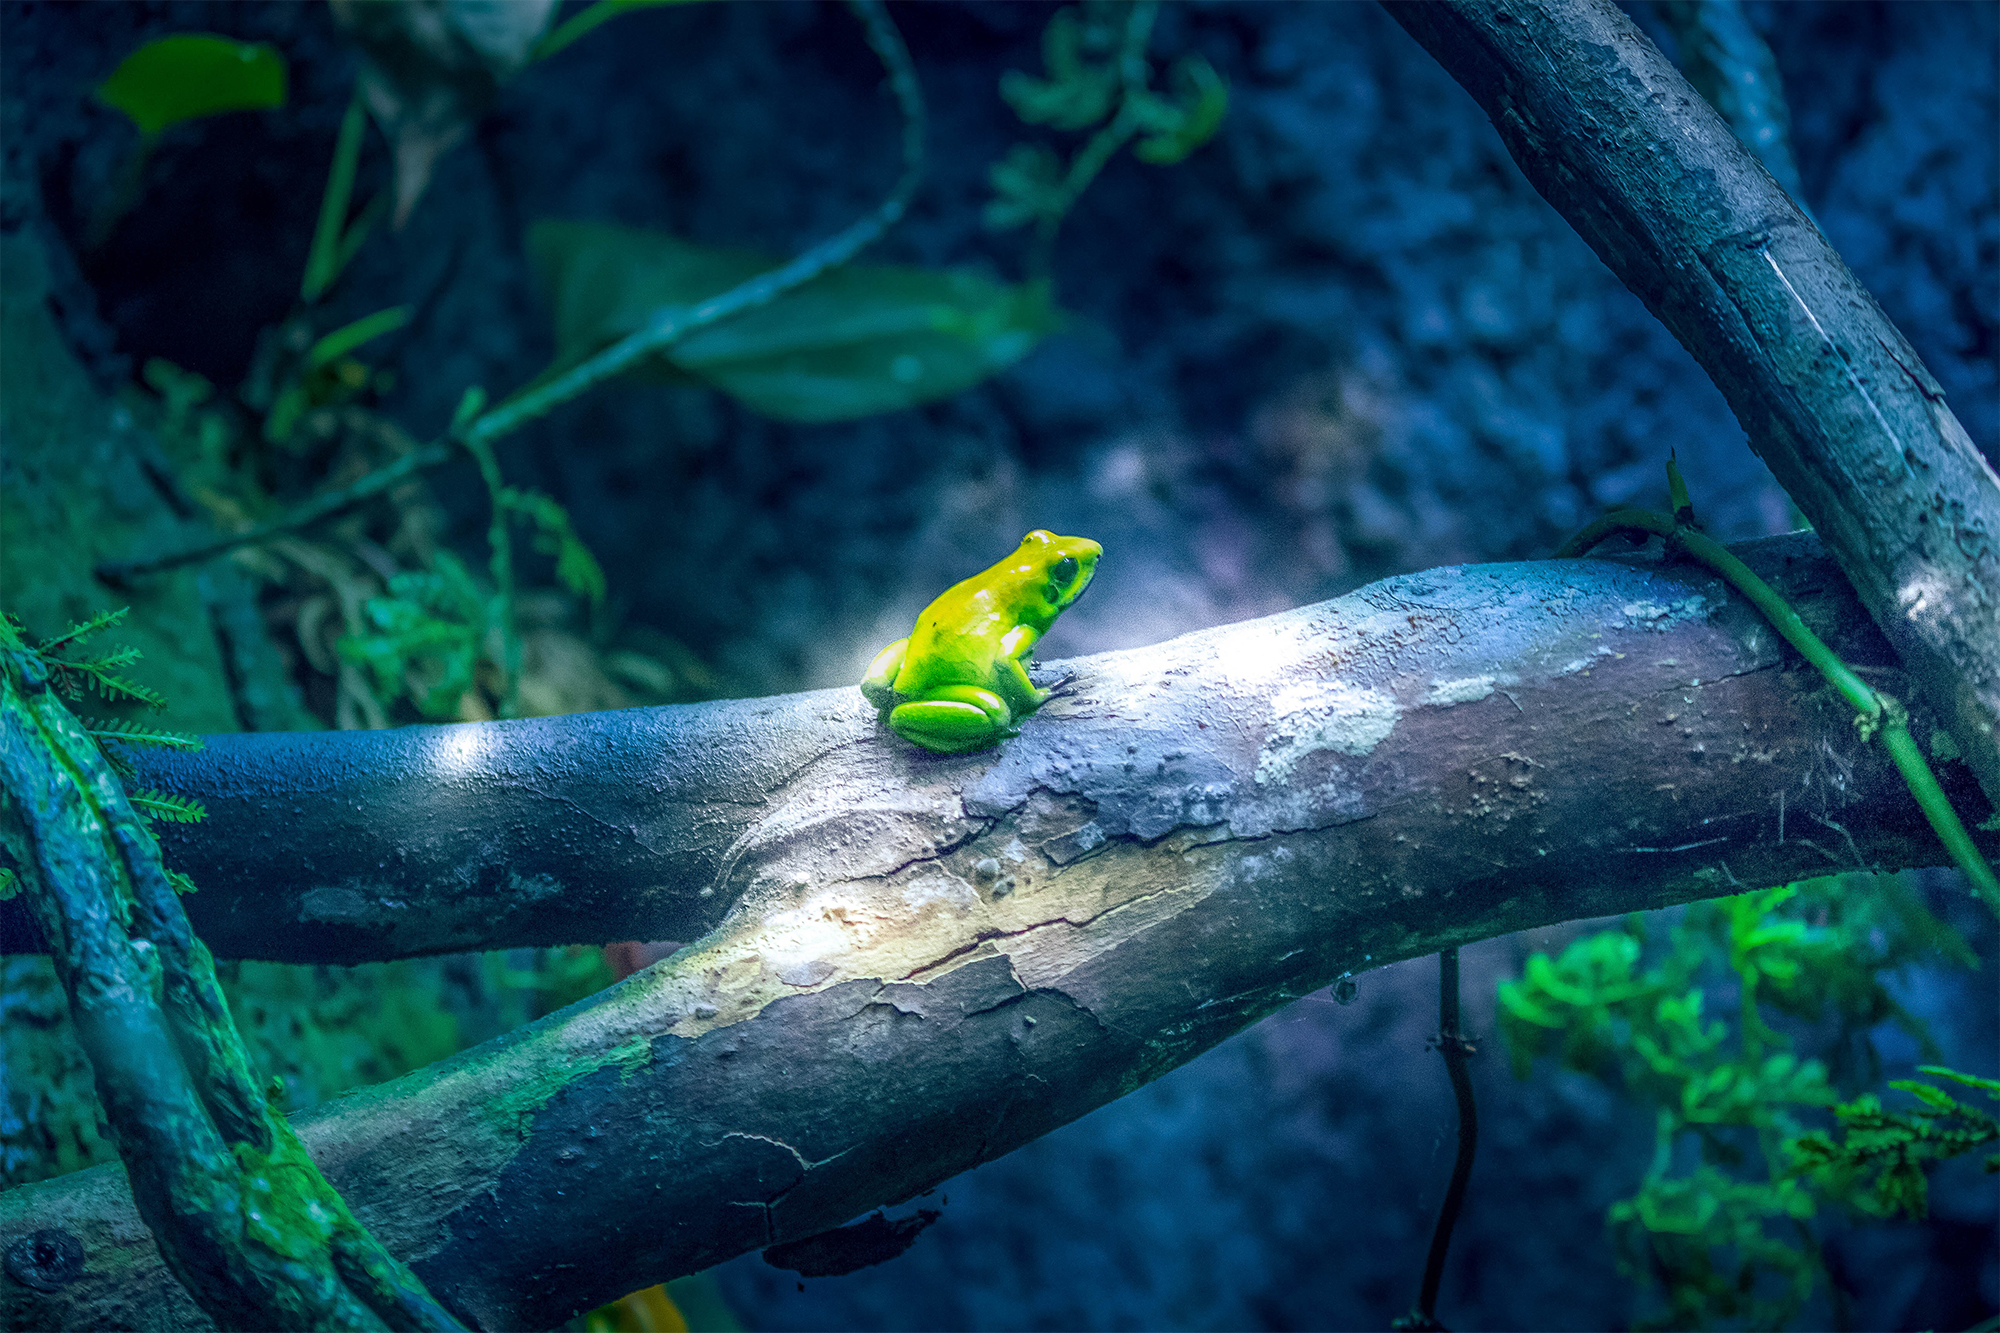 A Kambo tree frog